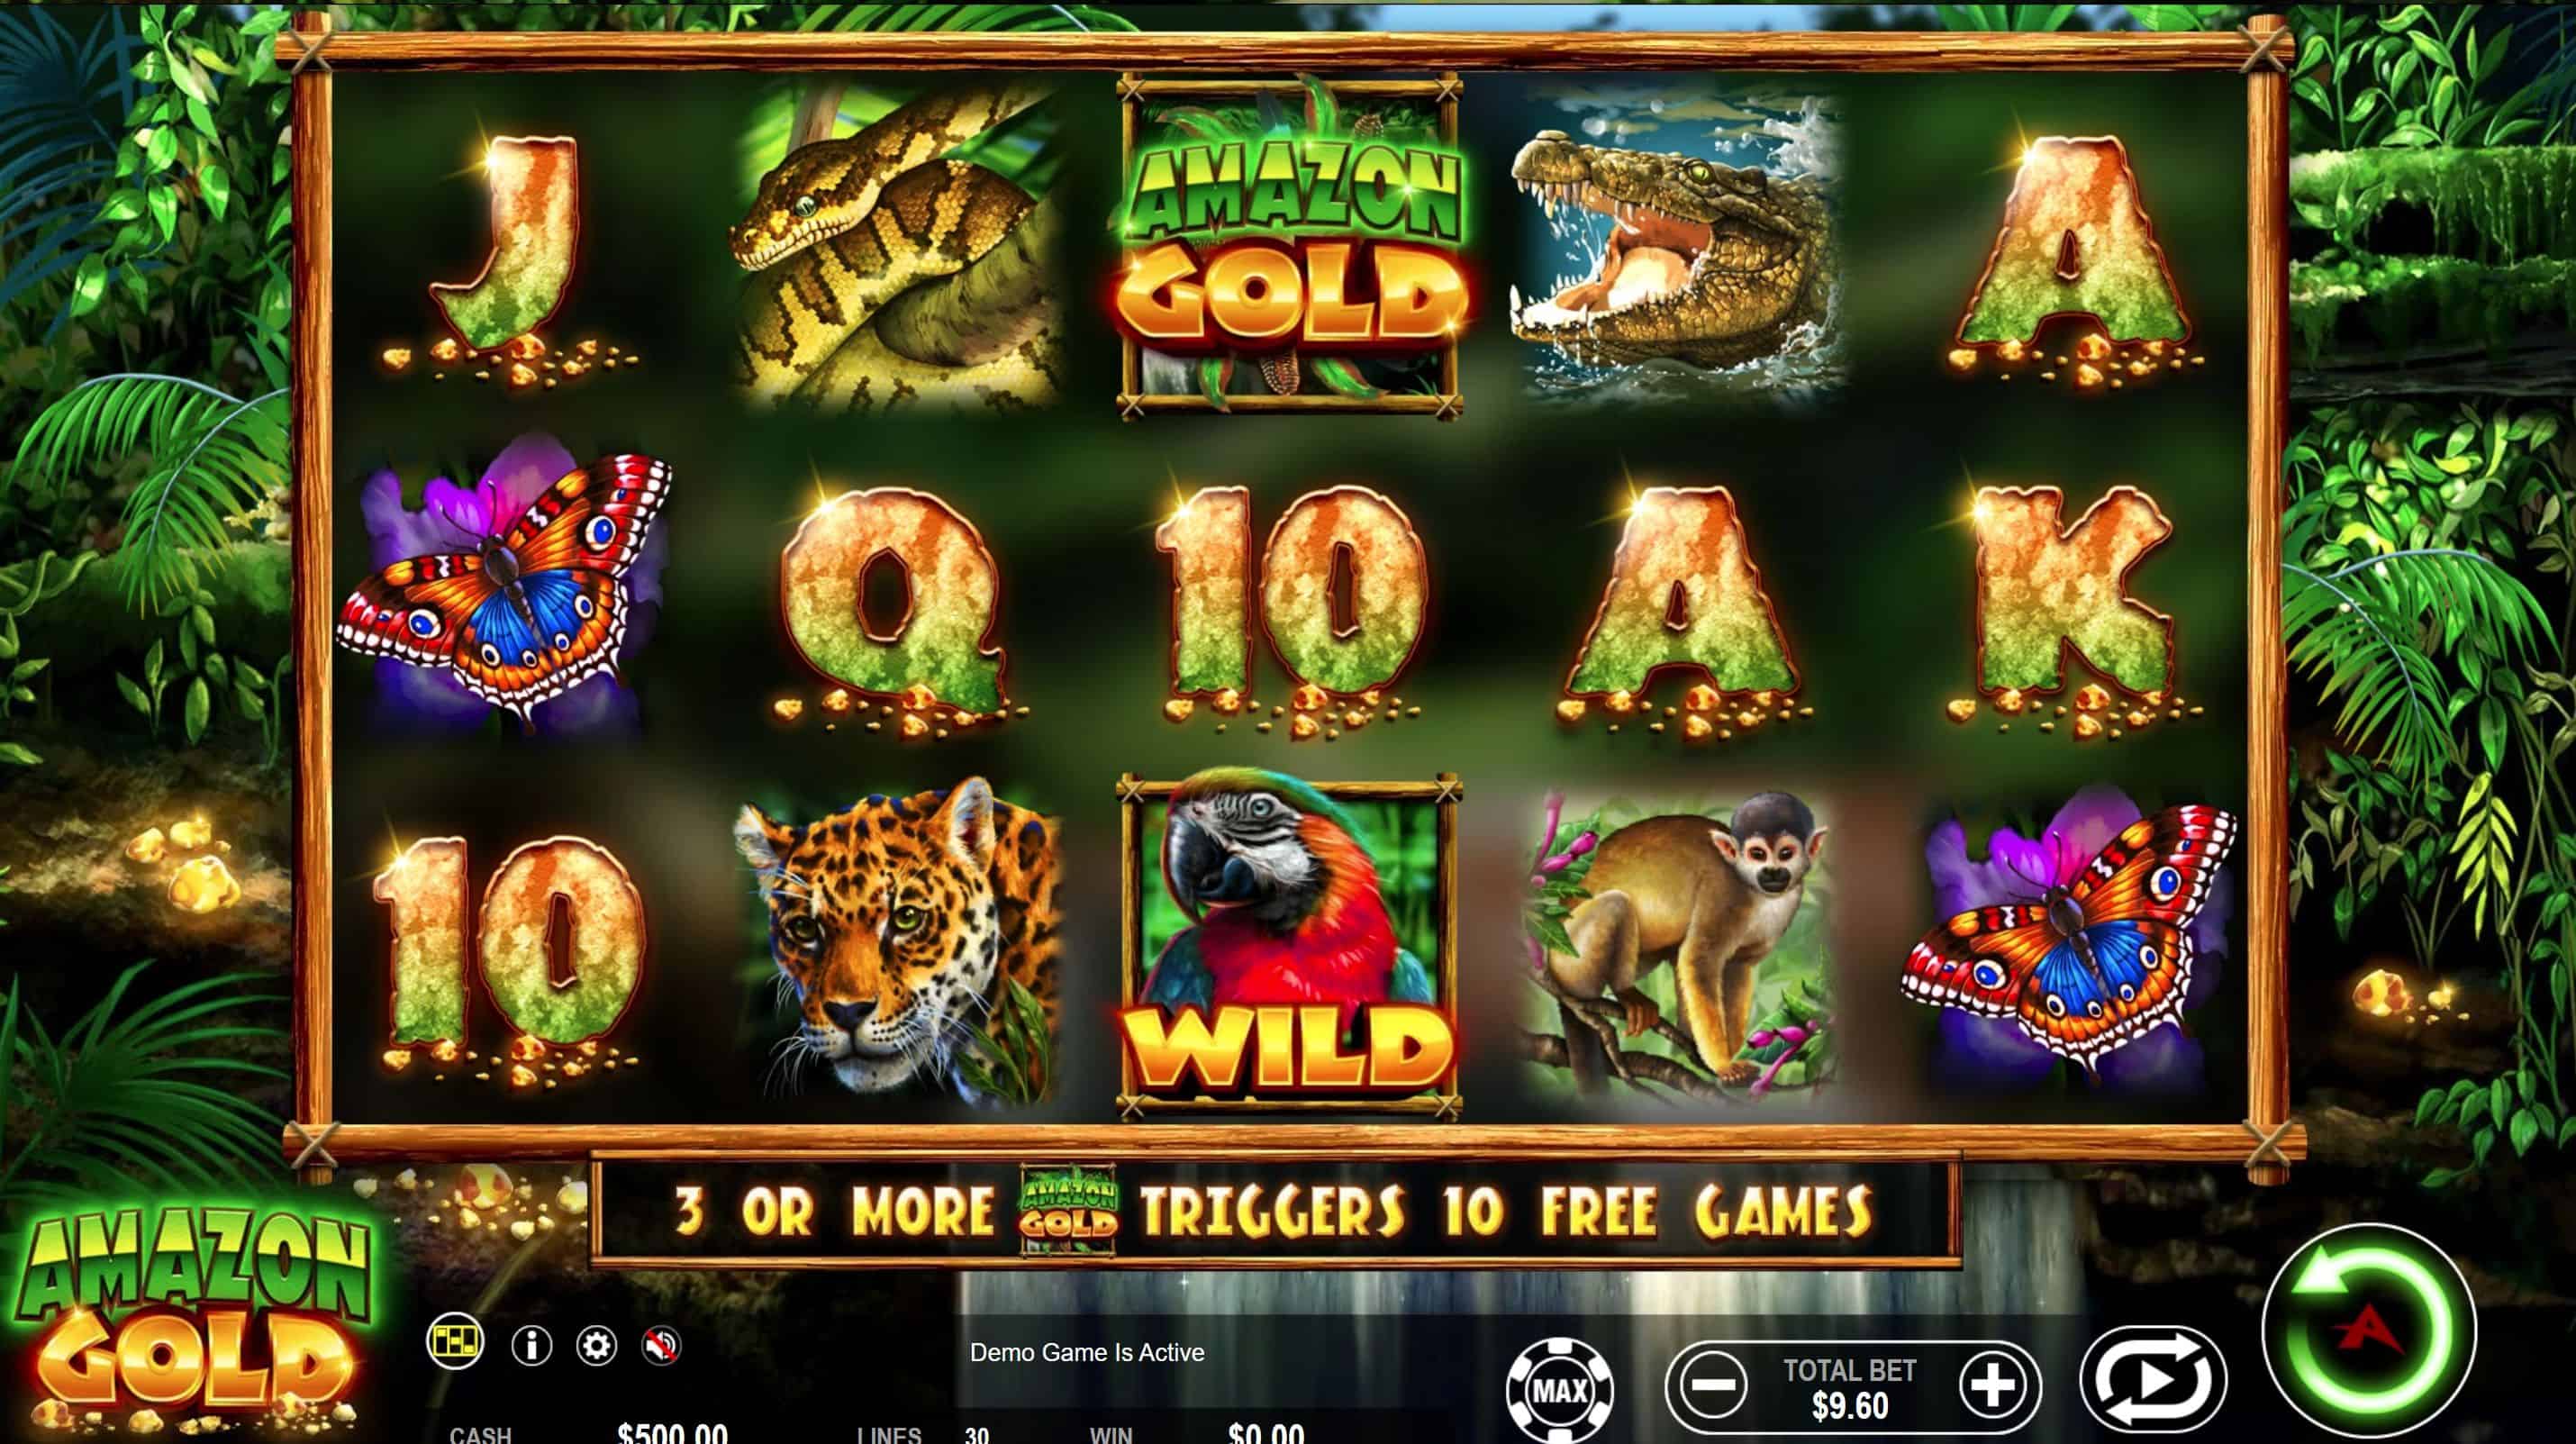 Amazon Gold Slot Game Free Play at Casino Ireland 01